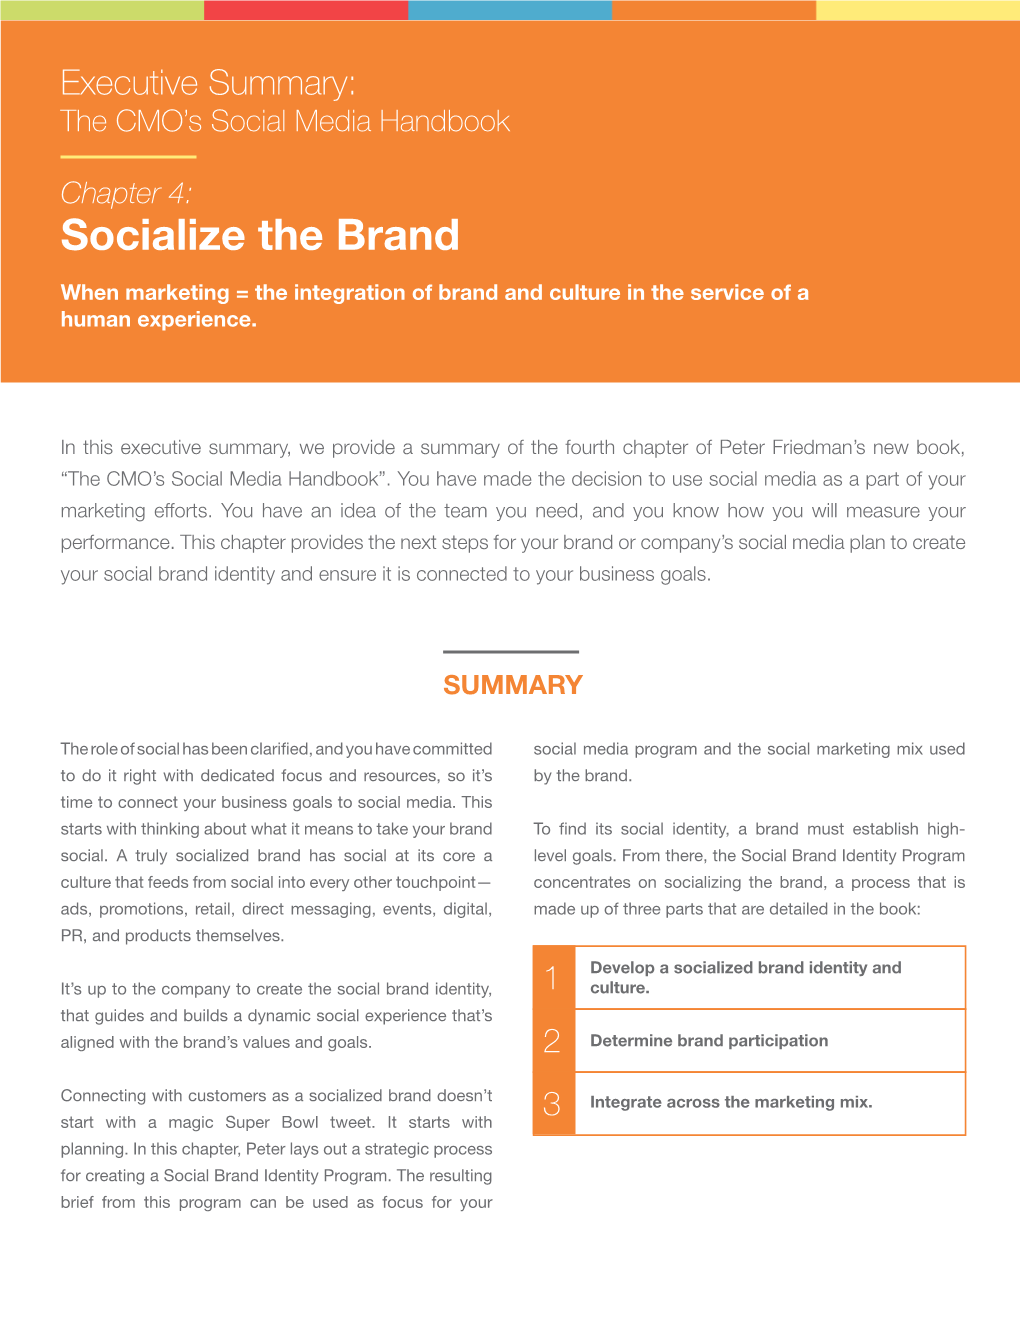 Socialize the Brand